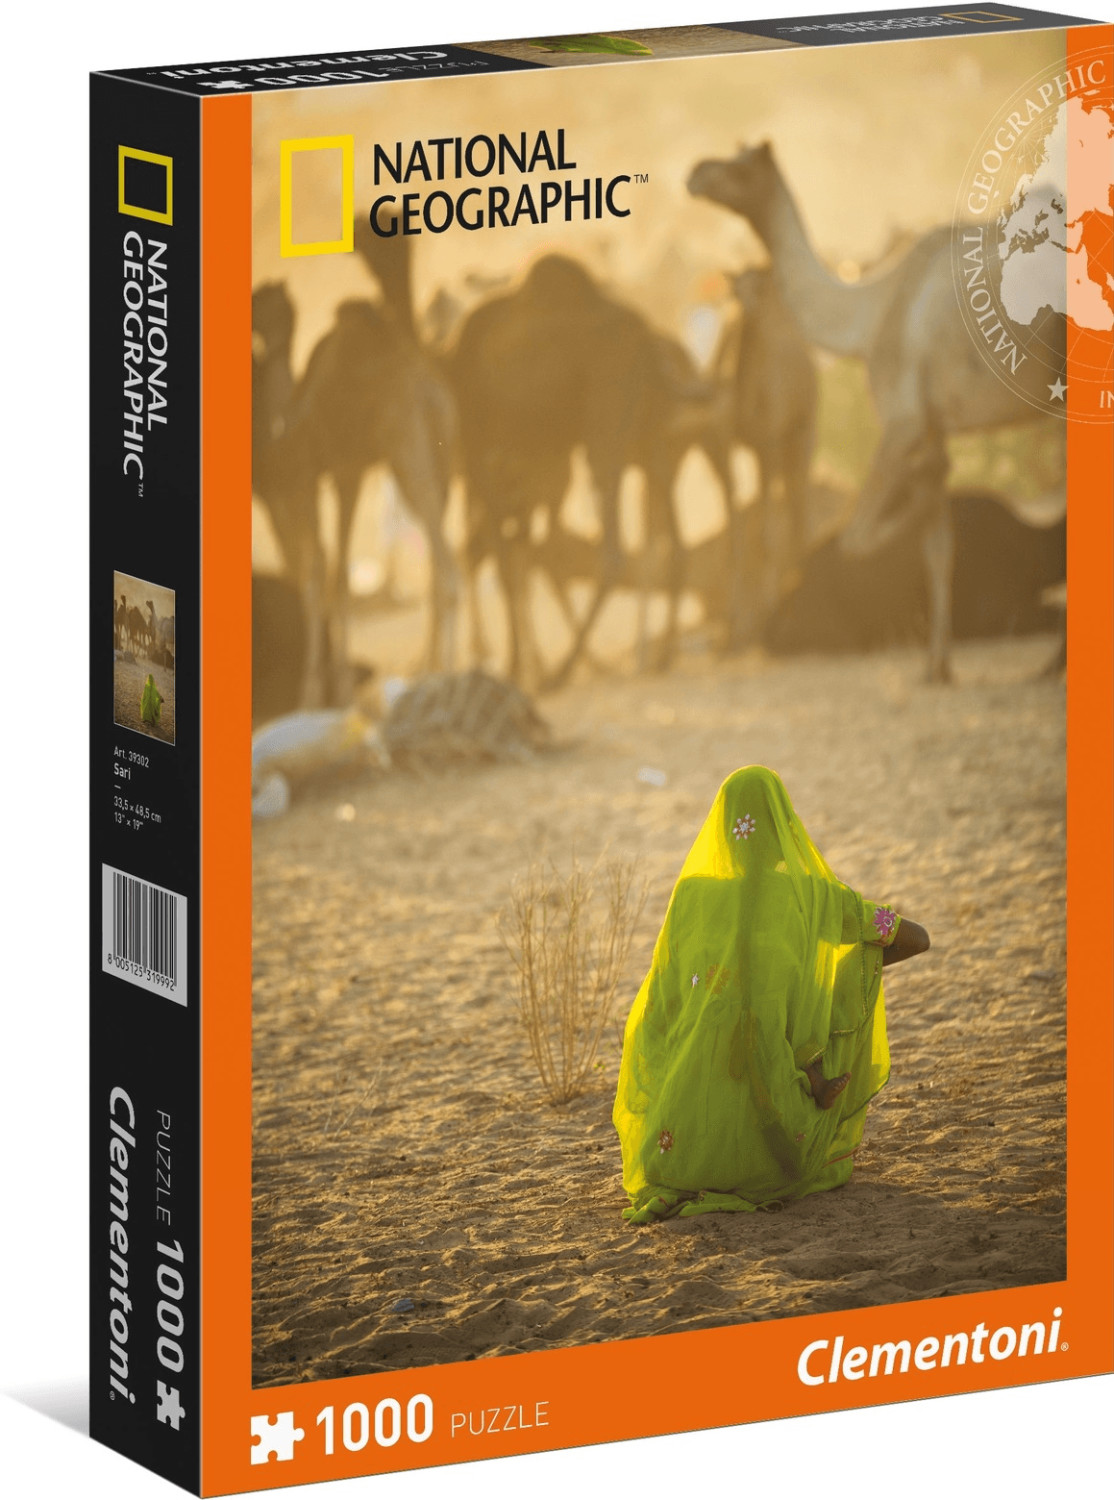 Clementoni Indian Woman - 1000 pcs - National Geographic